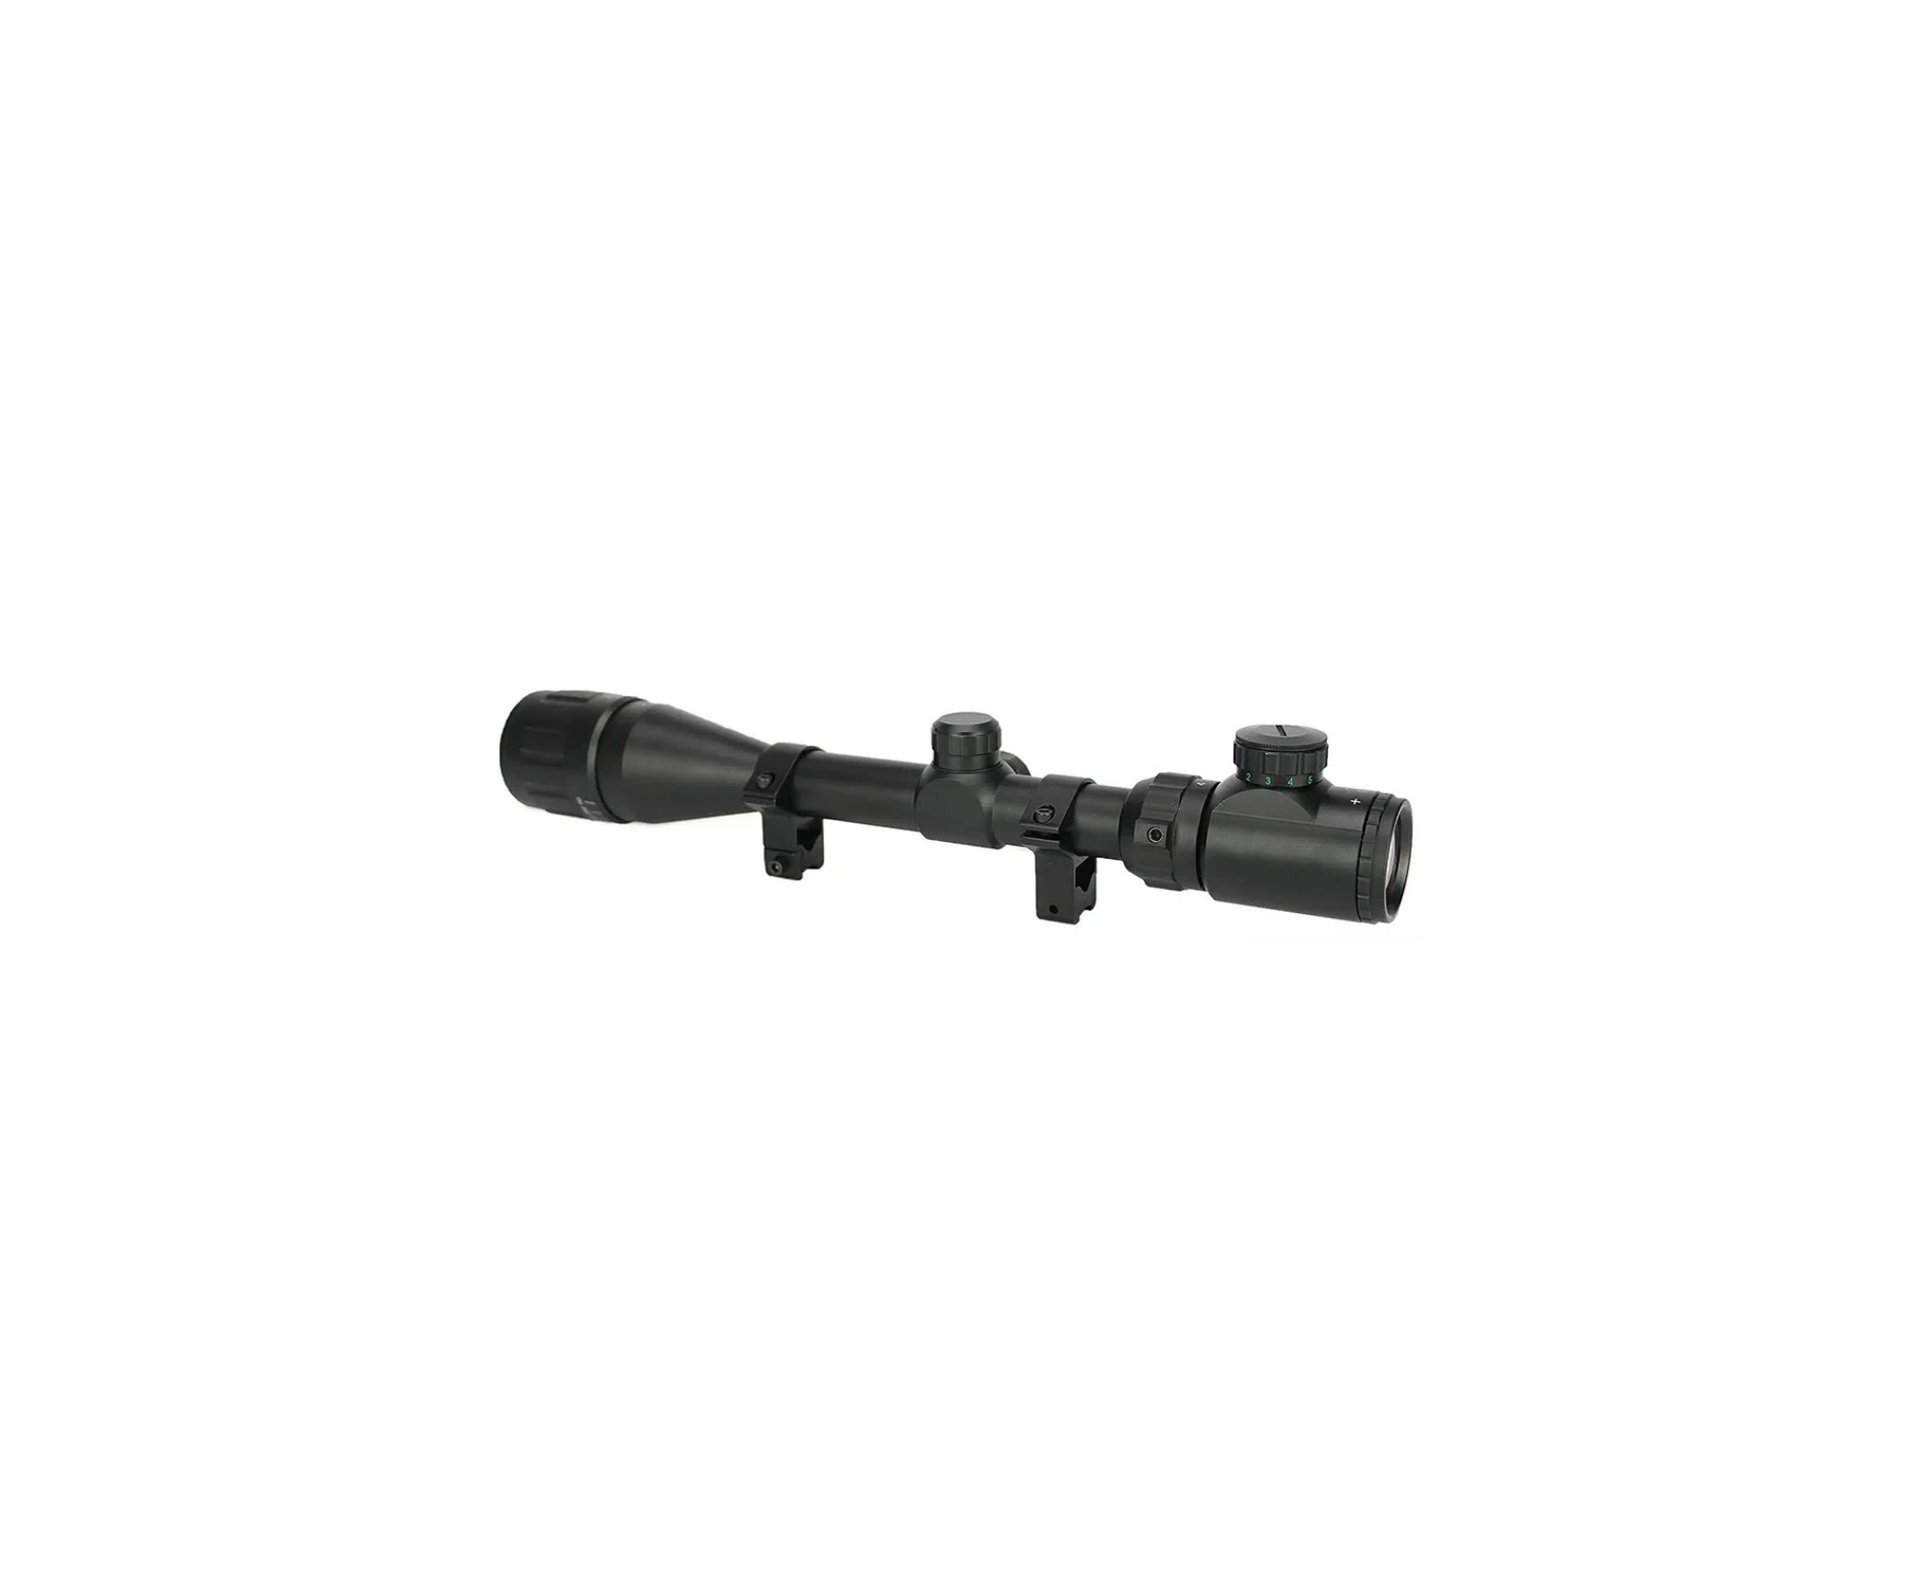 Carabina de Pressão PCP Beeman 13365 VR 5.5mm com Válvula Reguladora + Bomba + Capa/Case + Luneta 4-16x40